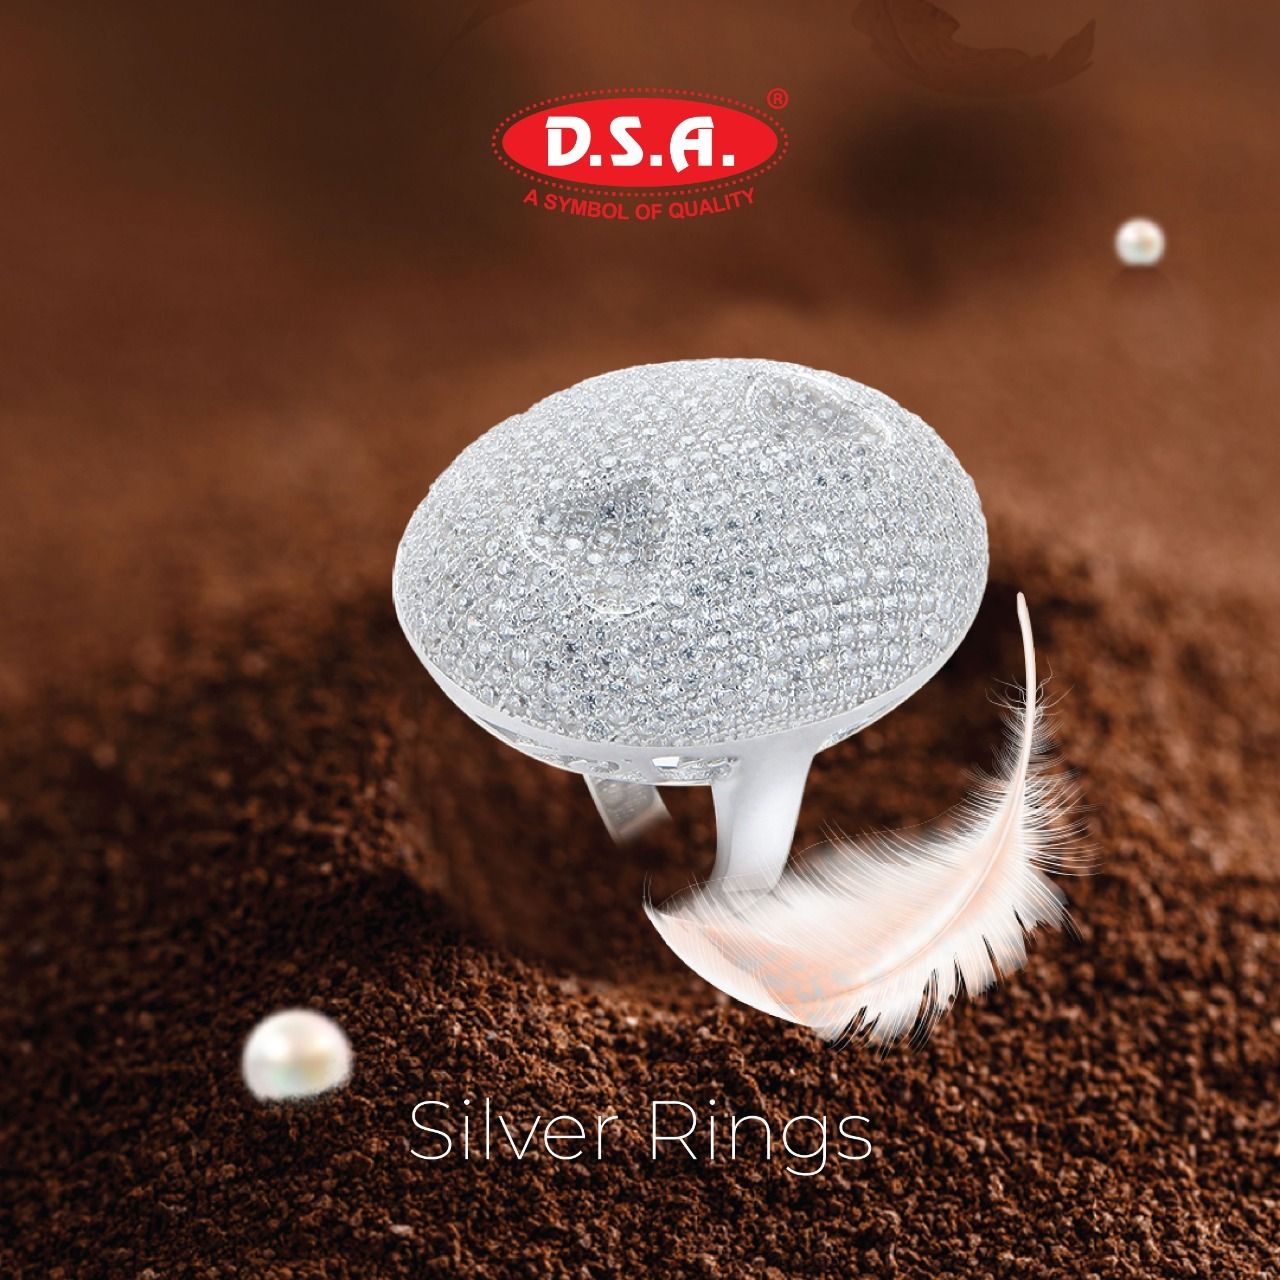 Designer Silver Ring